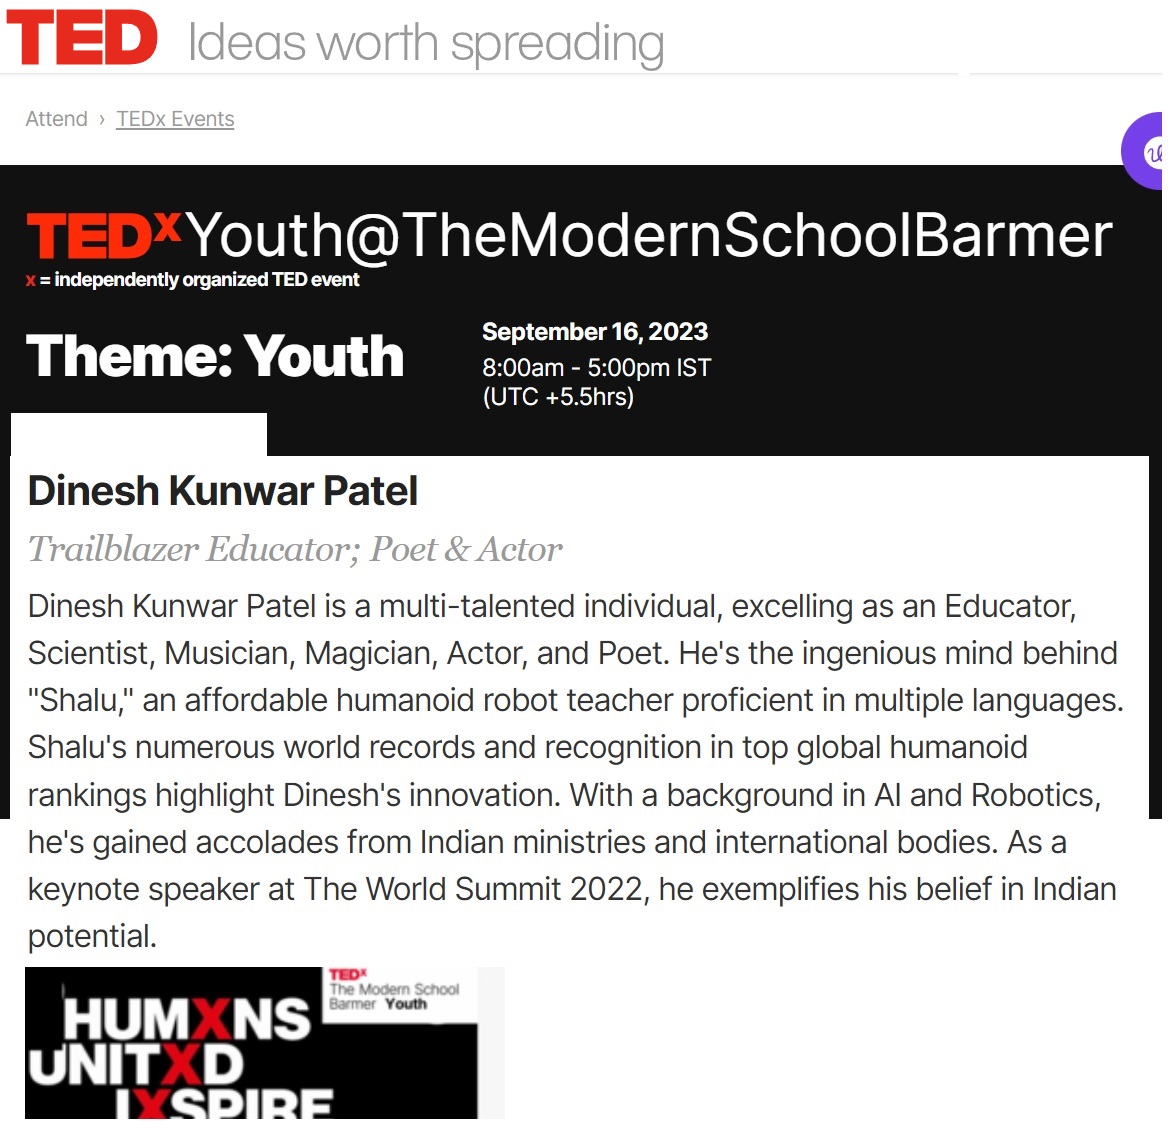 Thank you The #Modern #School #Barmer and the #TED.

#TEDx #TEDx2023 #tedxevent #TEDSpeaker #dinesh #patel #dineshpatel #dineshkunwarpatel #indian #robot #teacher #shalu #robotshalu #shalurobot #robotteacher #india #artificialintelligence #AI #robotics